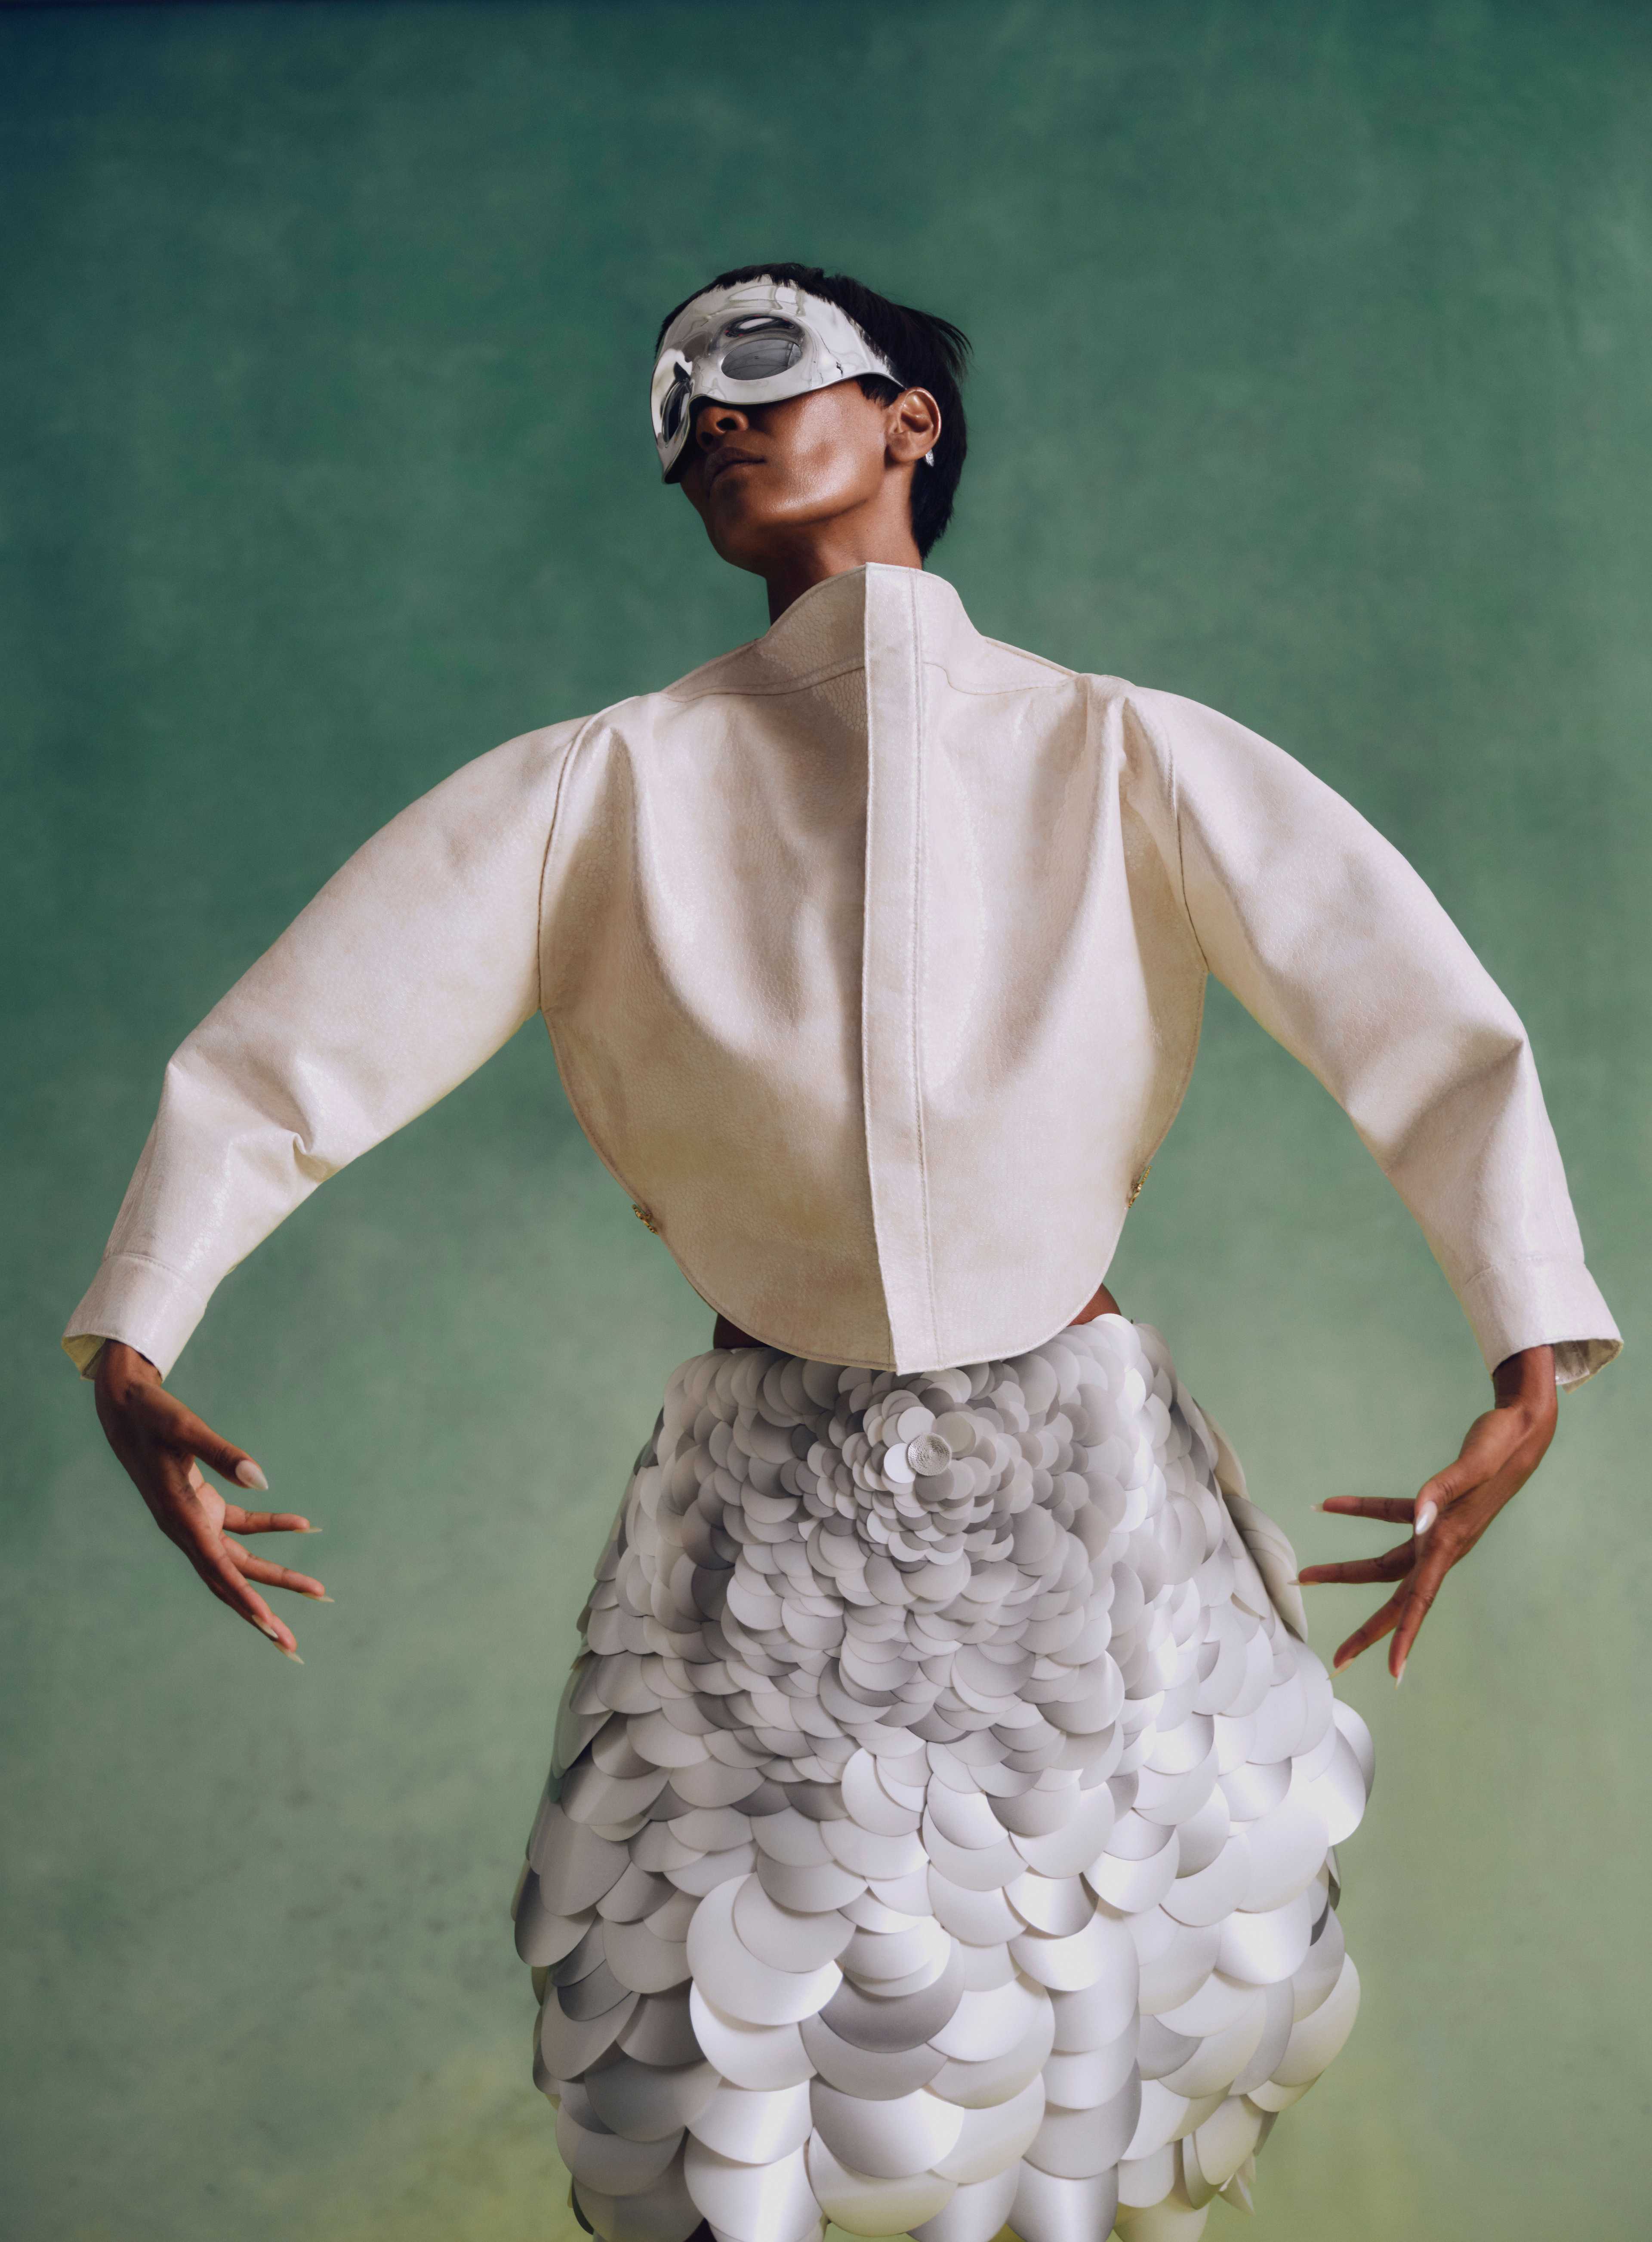 Vogue Italia - Campbell Addy + Yagamoto - 5947